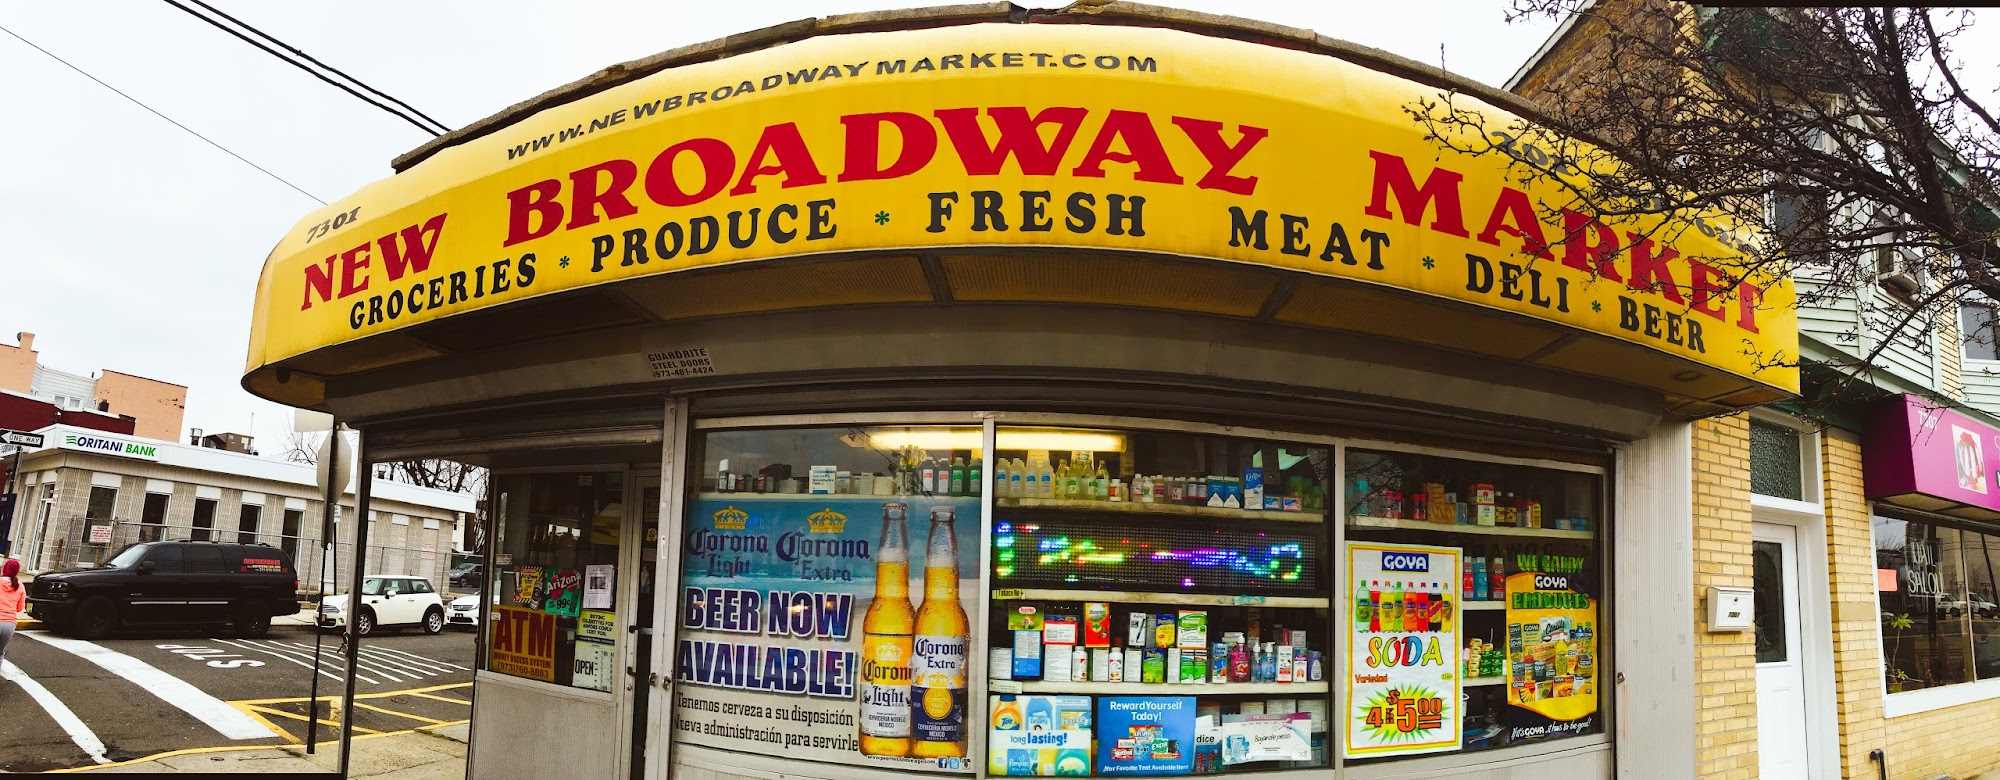 New Broadway Market